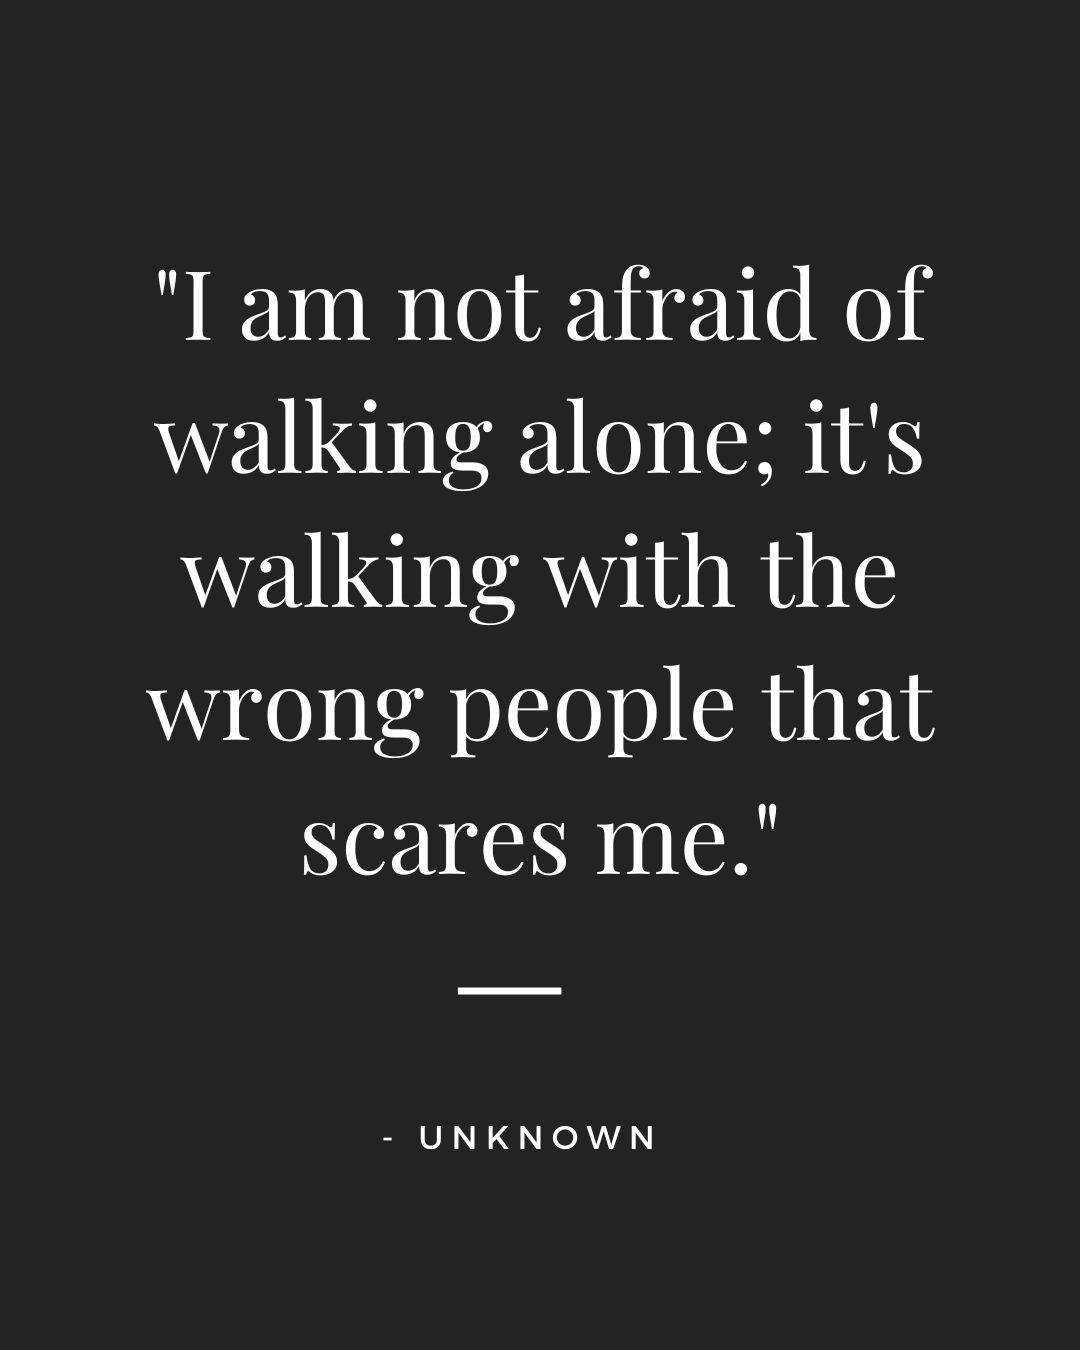 Walk Alone Quotes